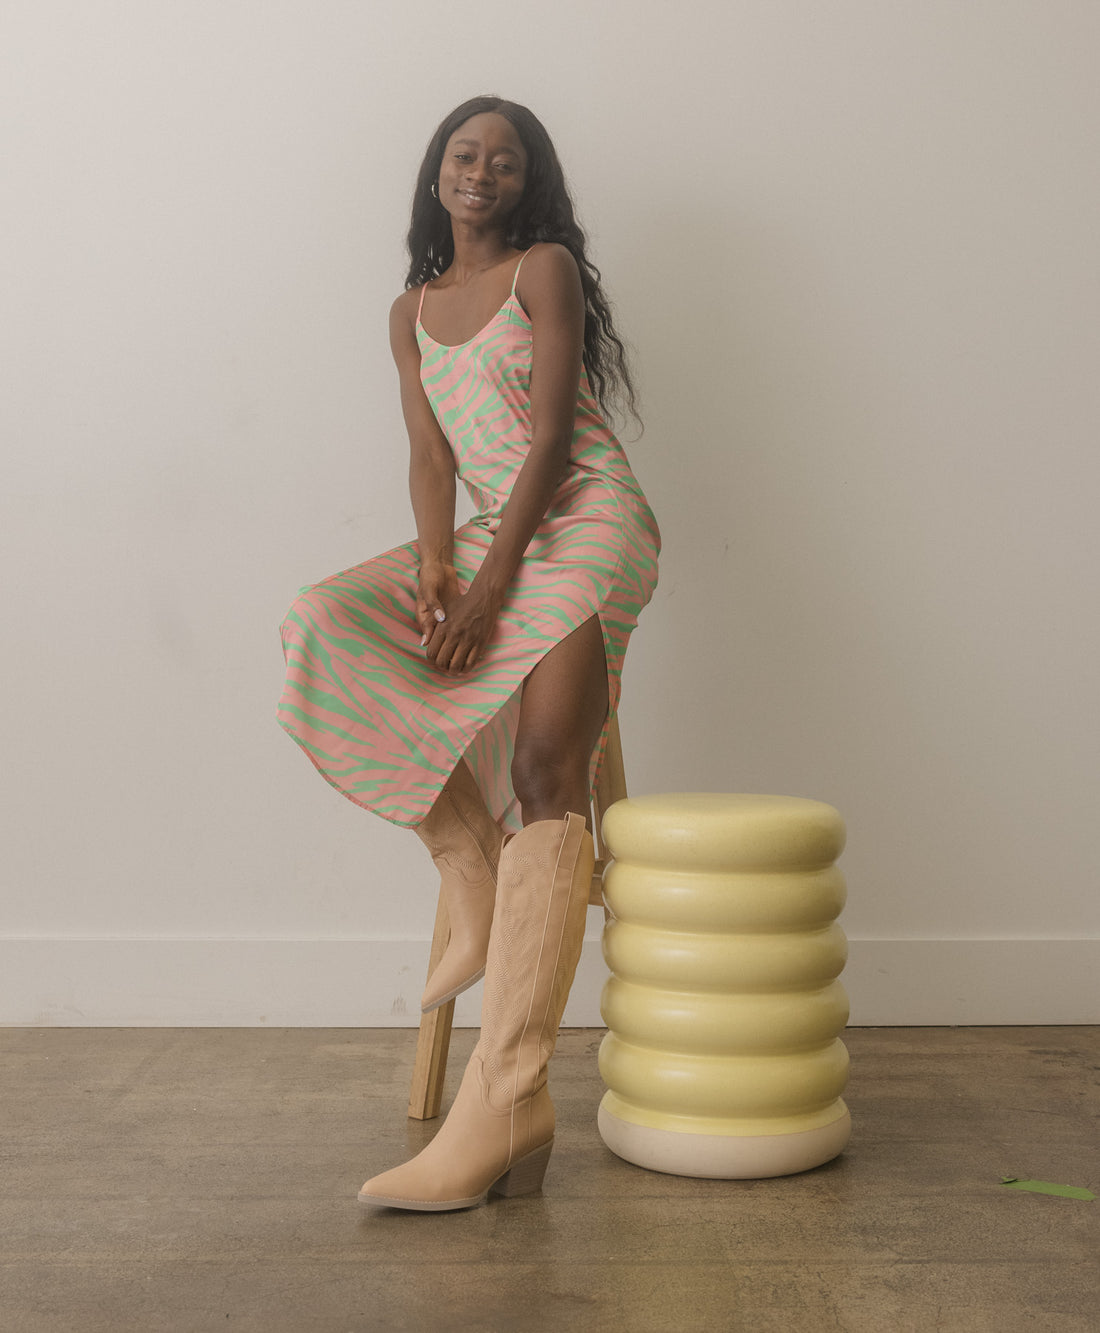 Samara Knee High Cowboy Boots: Nude - Bella and Bloom Boutique